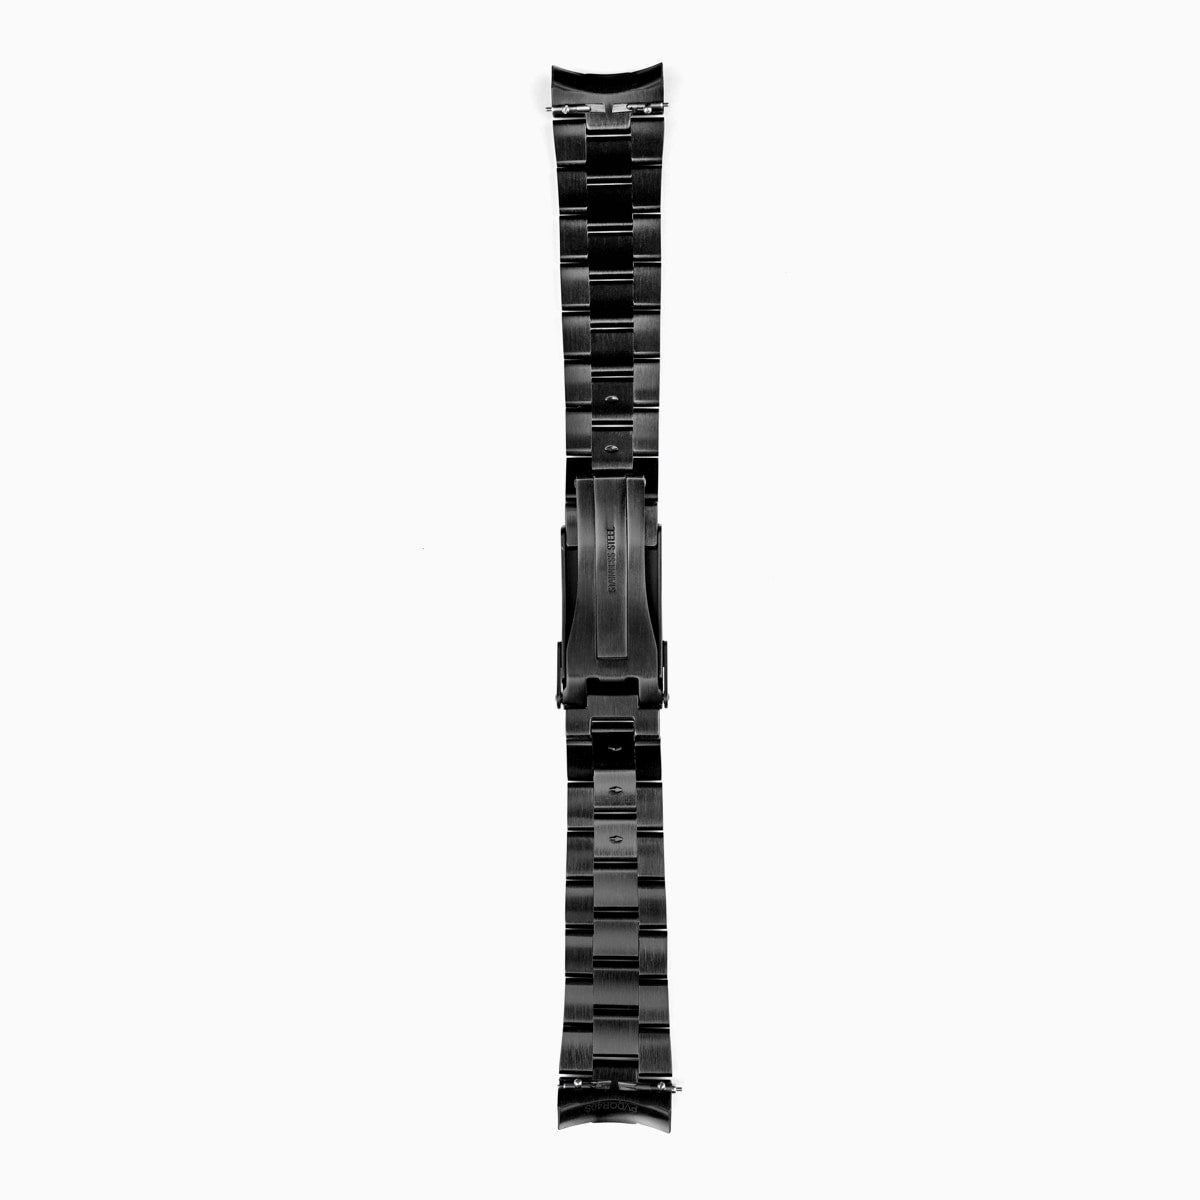 Premium Black PVD Quick Release Bracelet